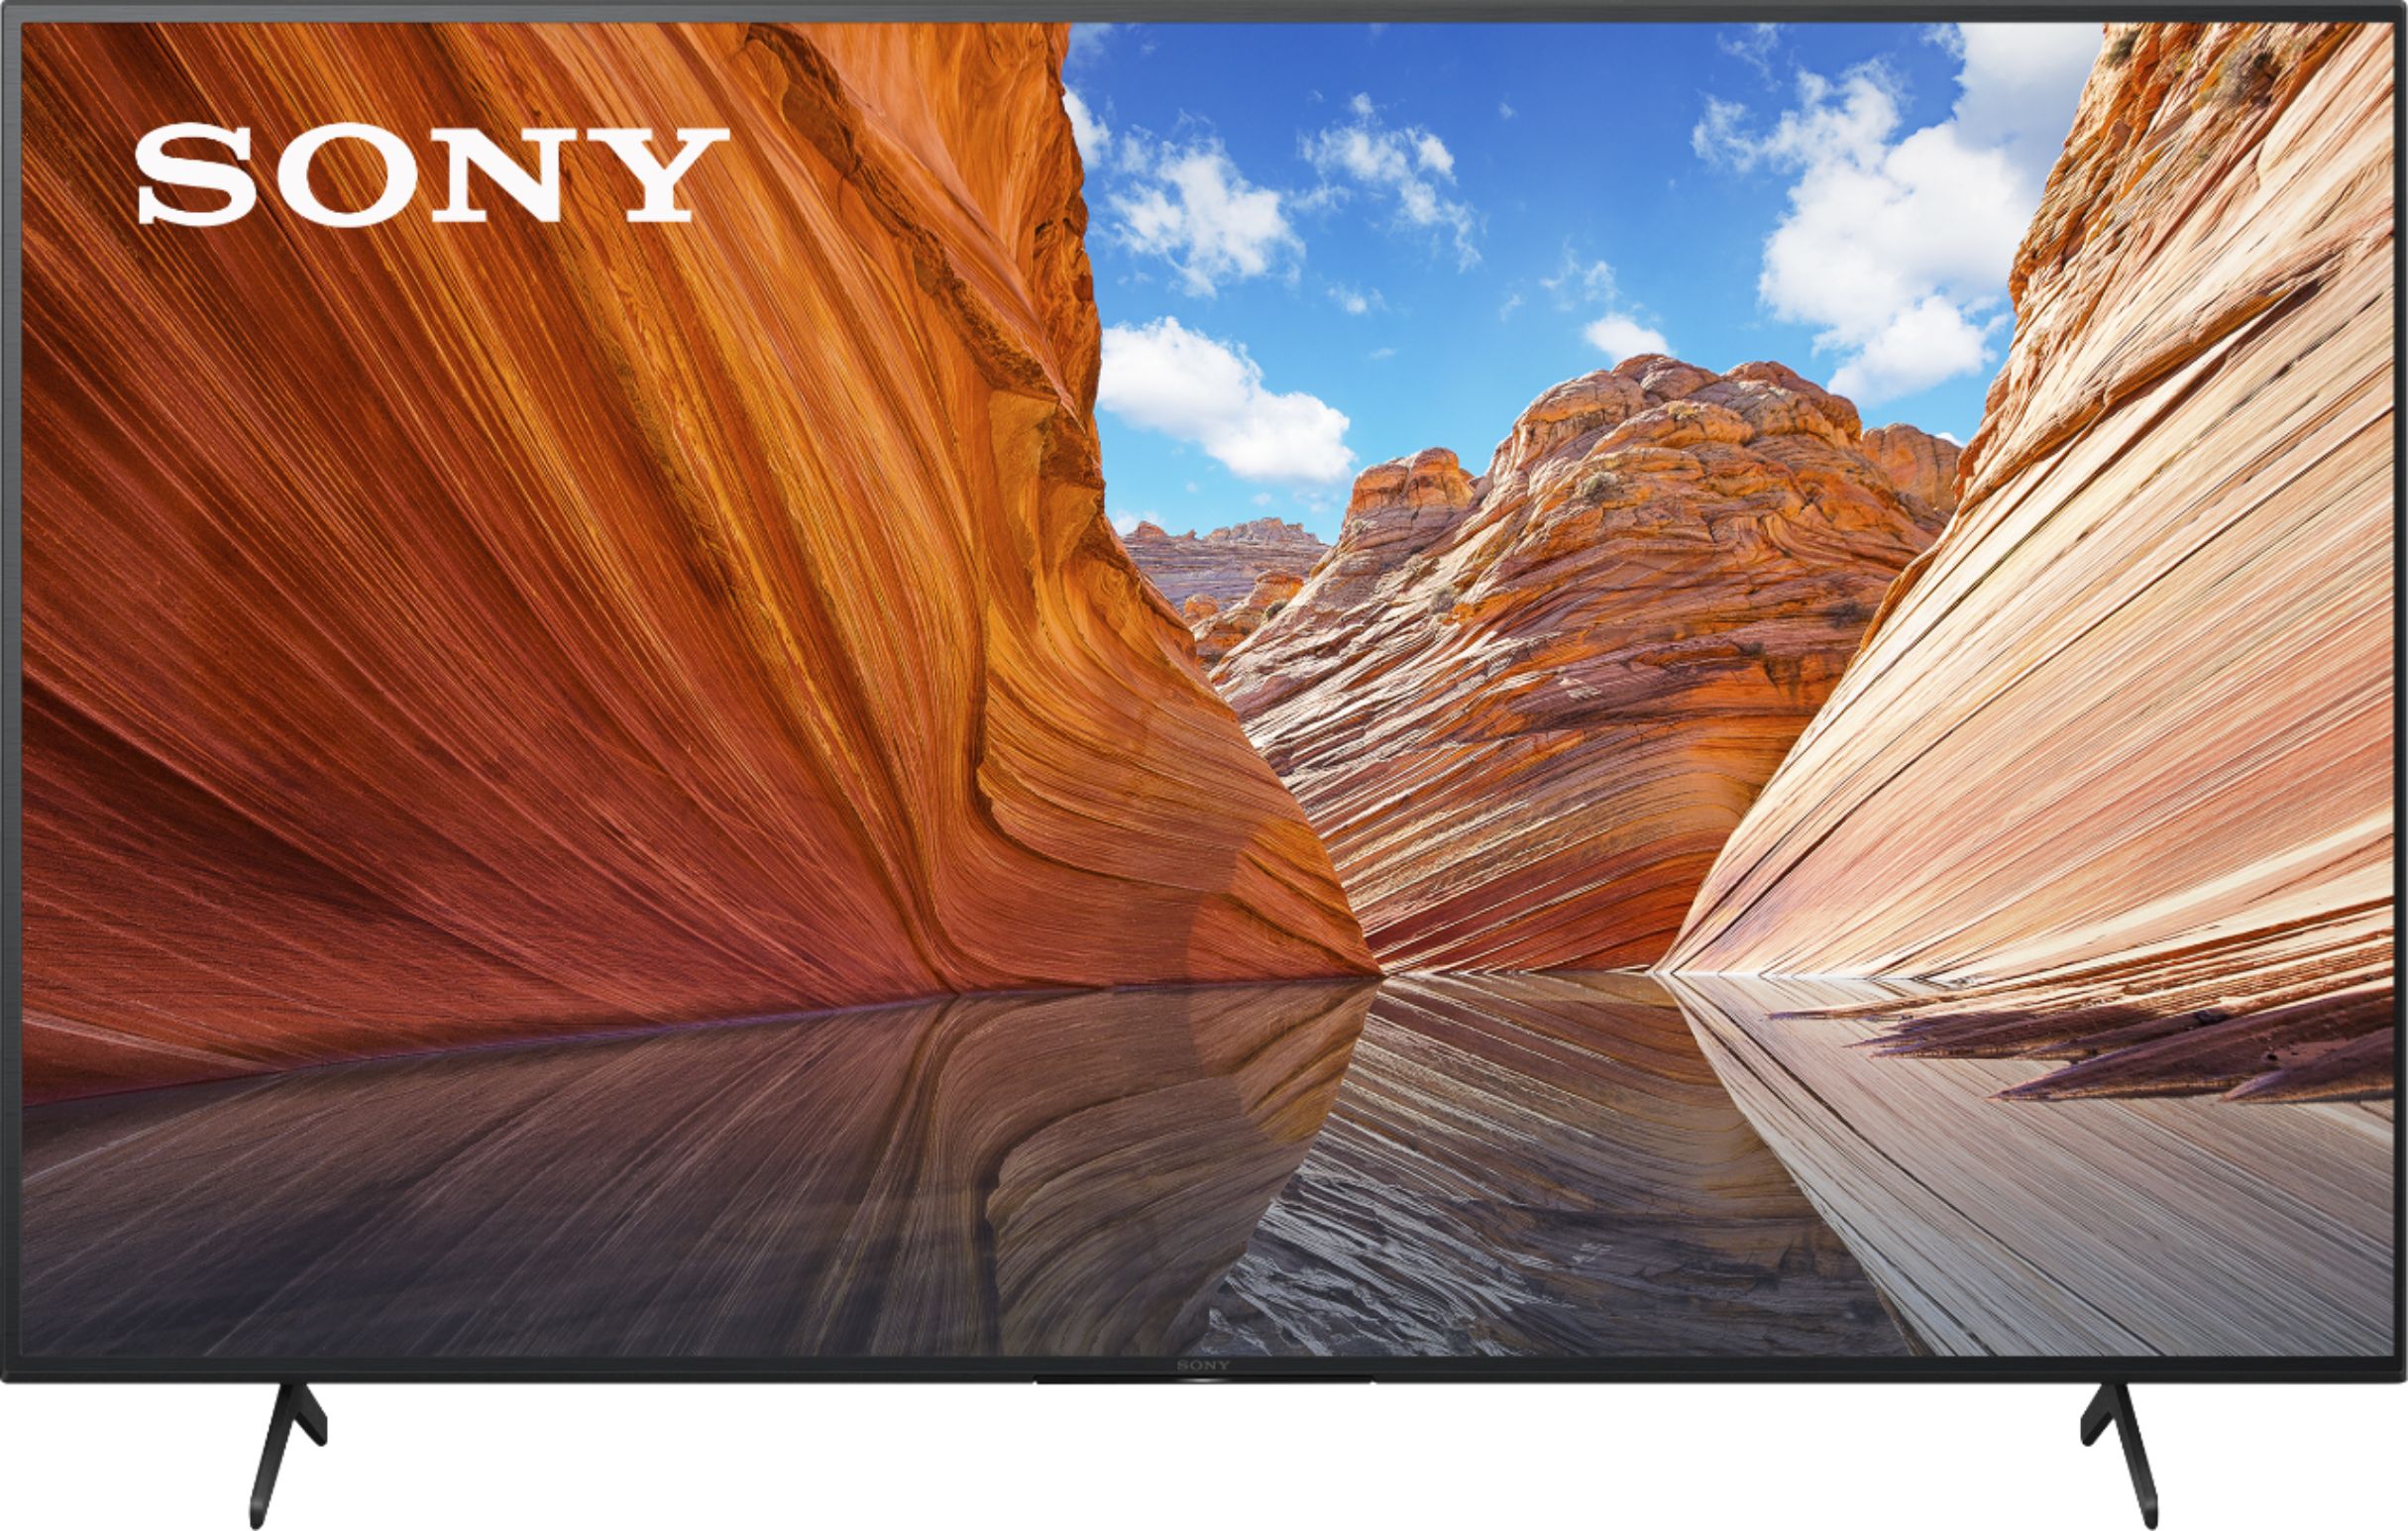 Sony 55" X80J (2021) 4K UHD HDR LED Google TV @ Walmart $498